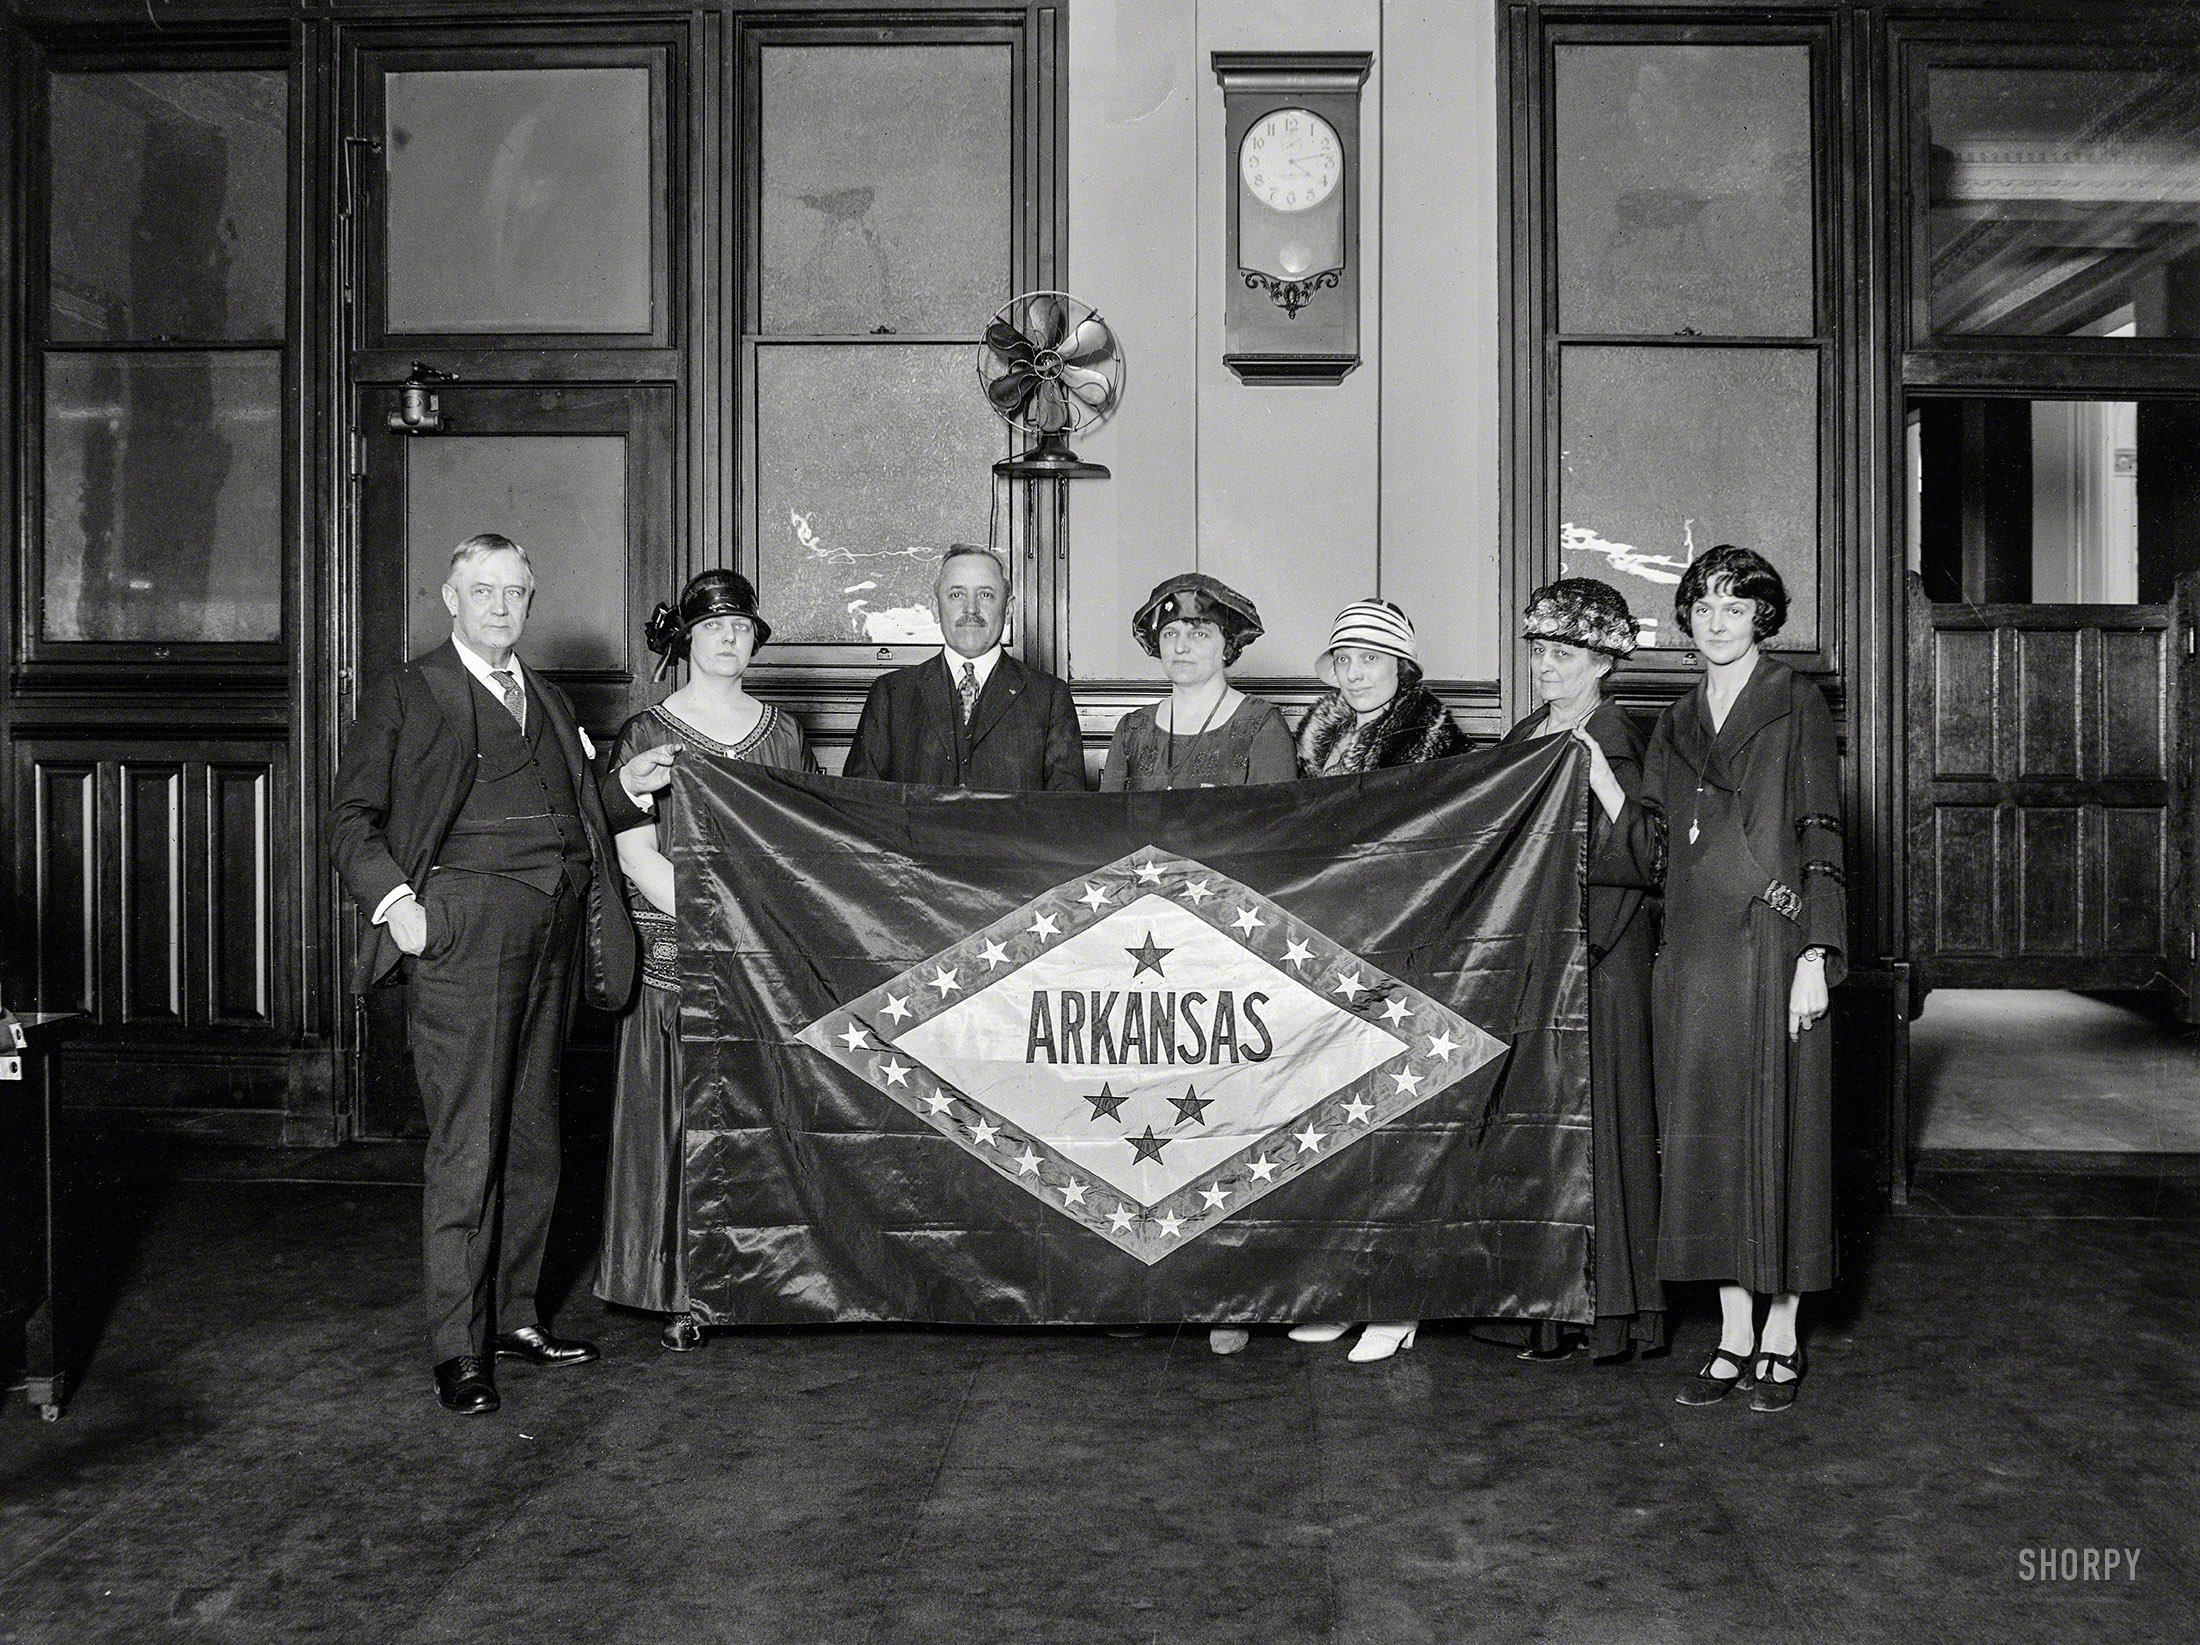 April 1924. Washington, D.C. "Group holding Arkansas state flag." Regnat populus! Harris & Ewing Collection glass negative. View full size.